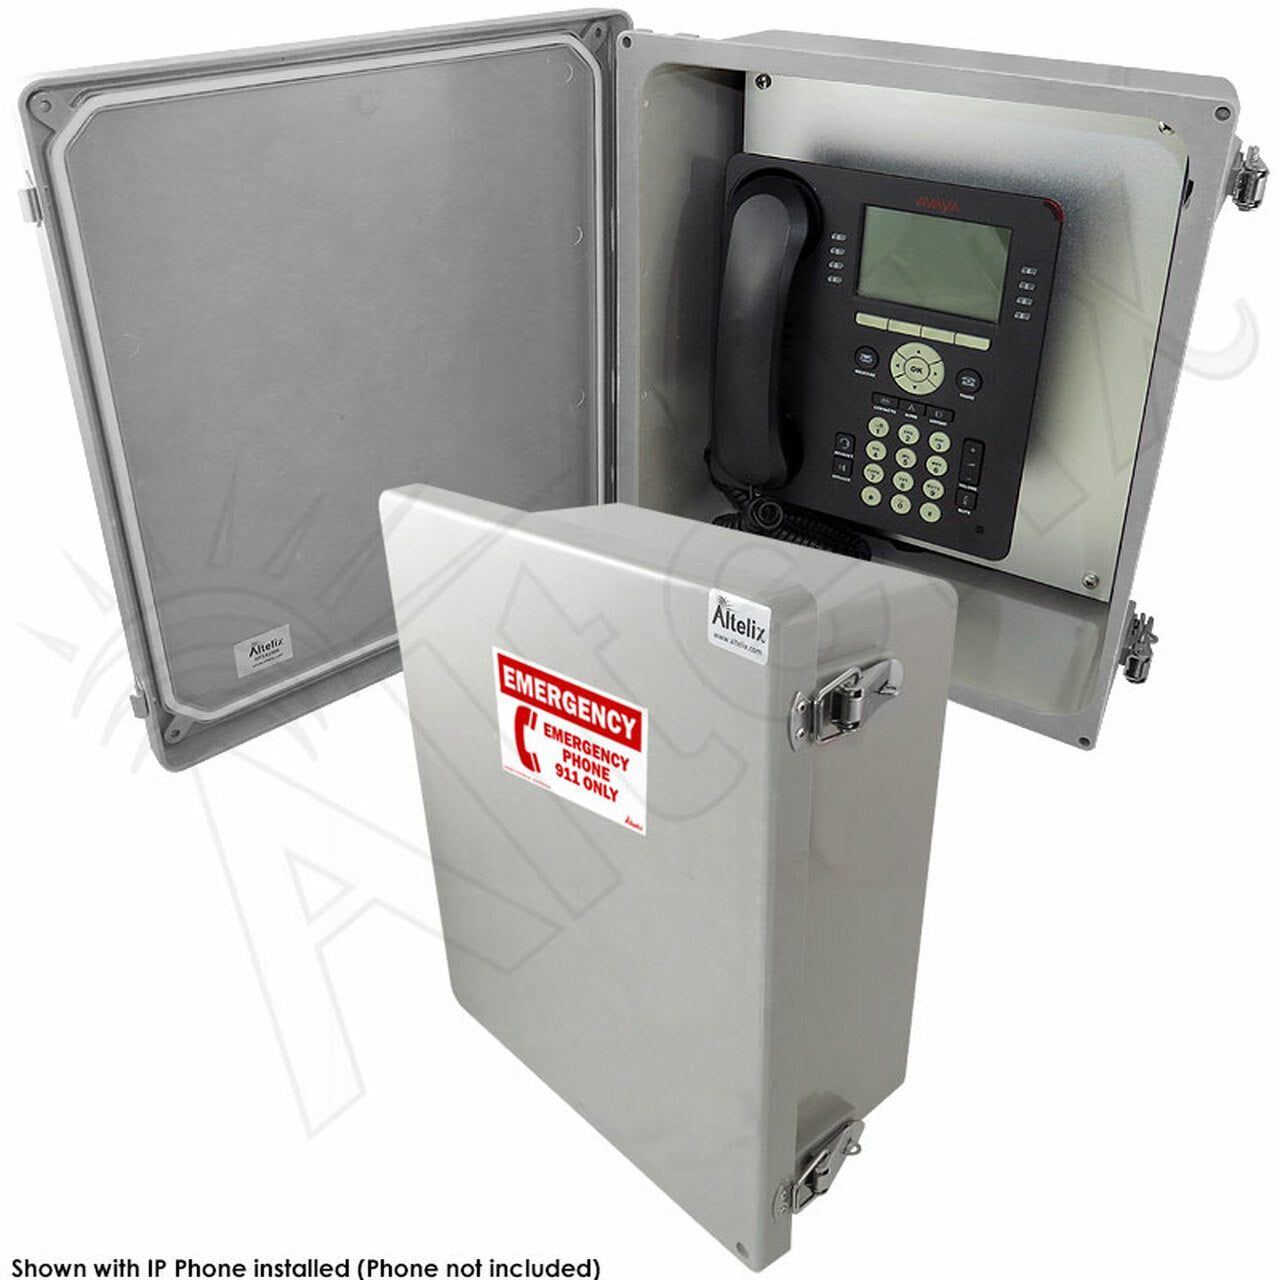 Altelix NEMA 4X Outdoor Weatherproof IP Phone Call Box with Emergency Phone Label